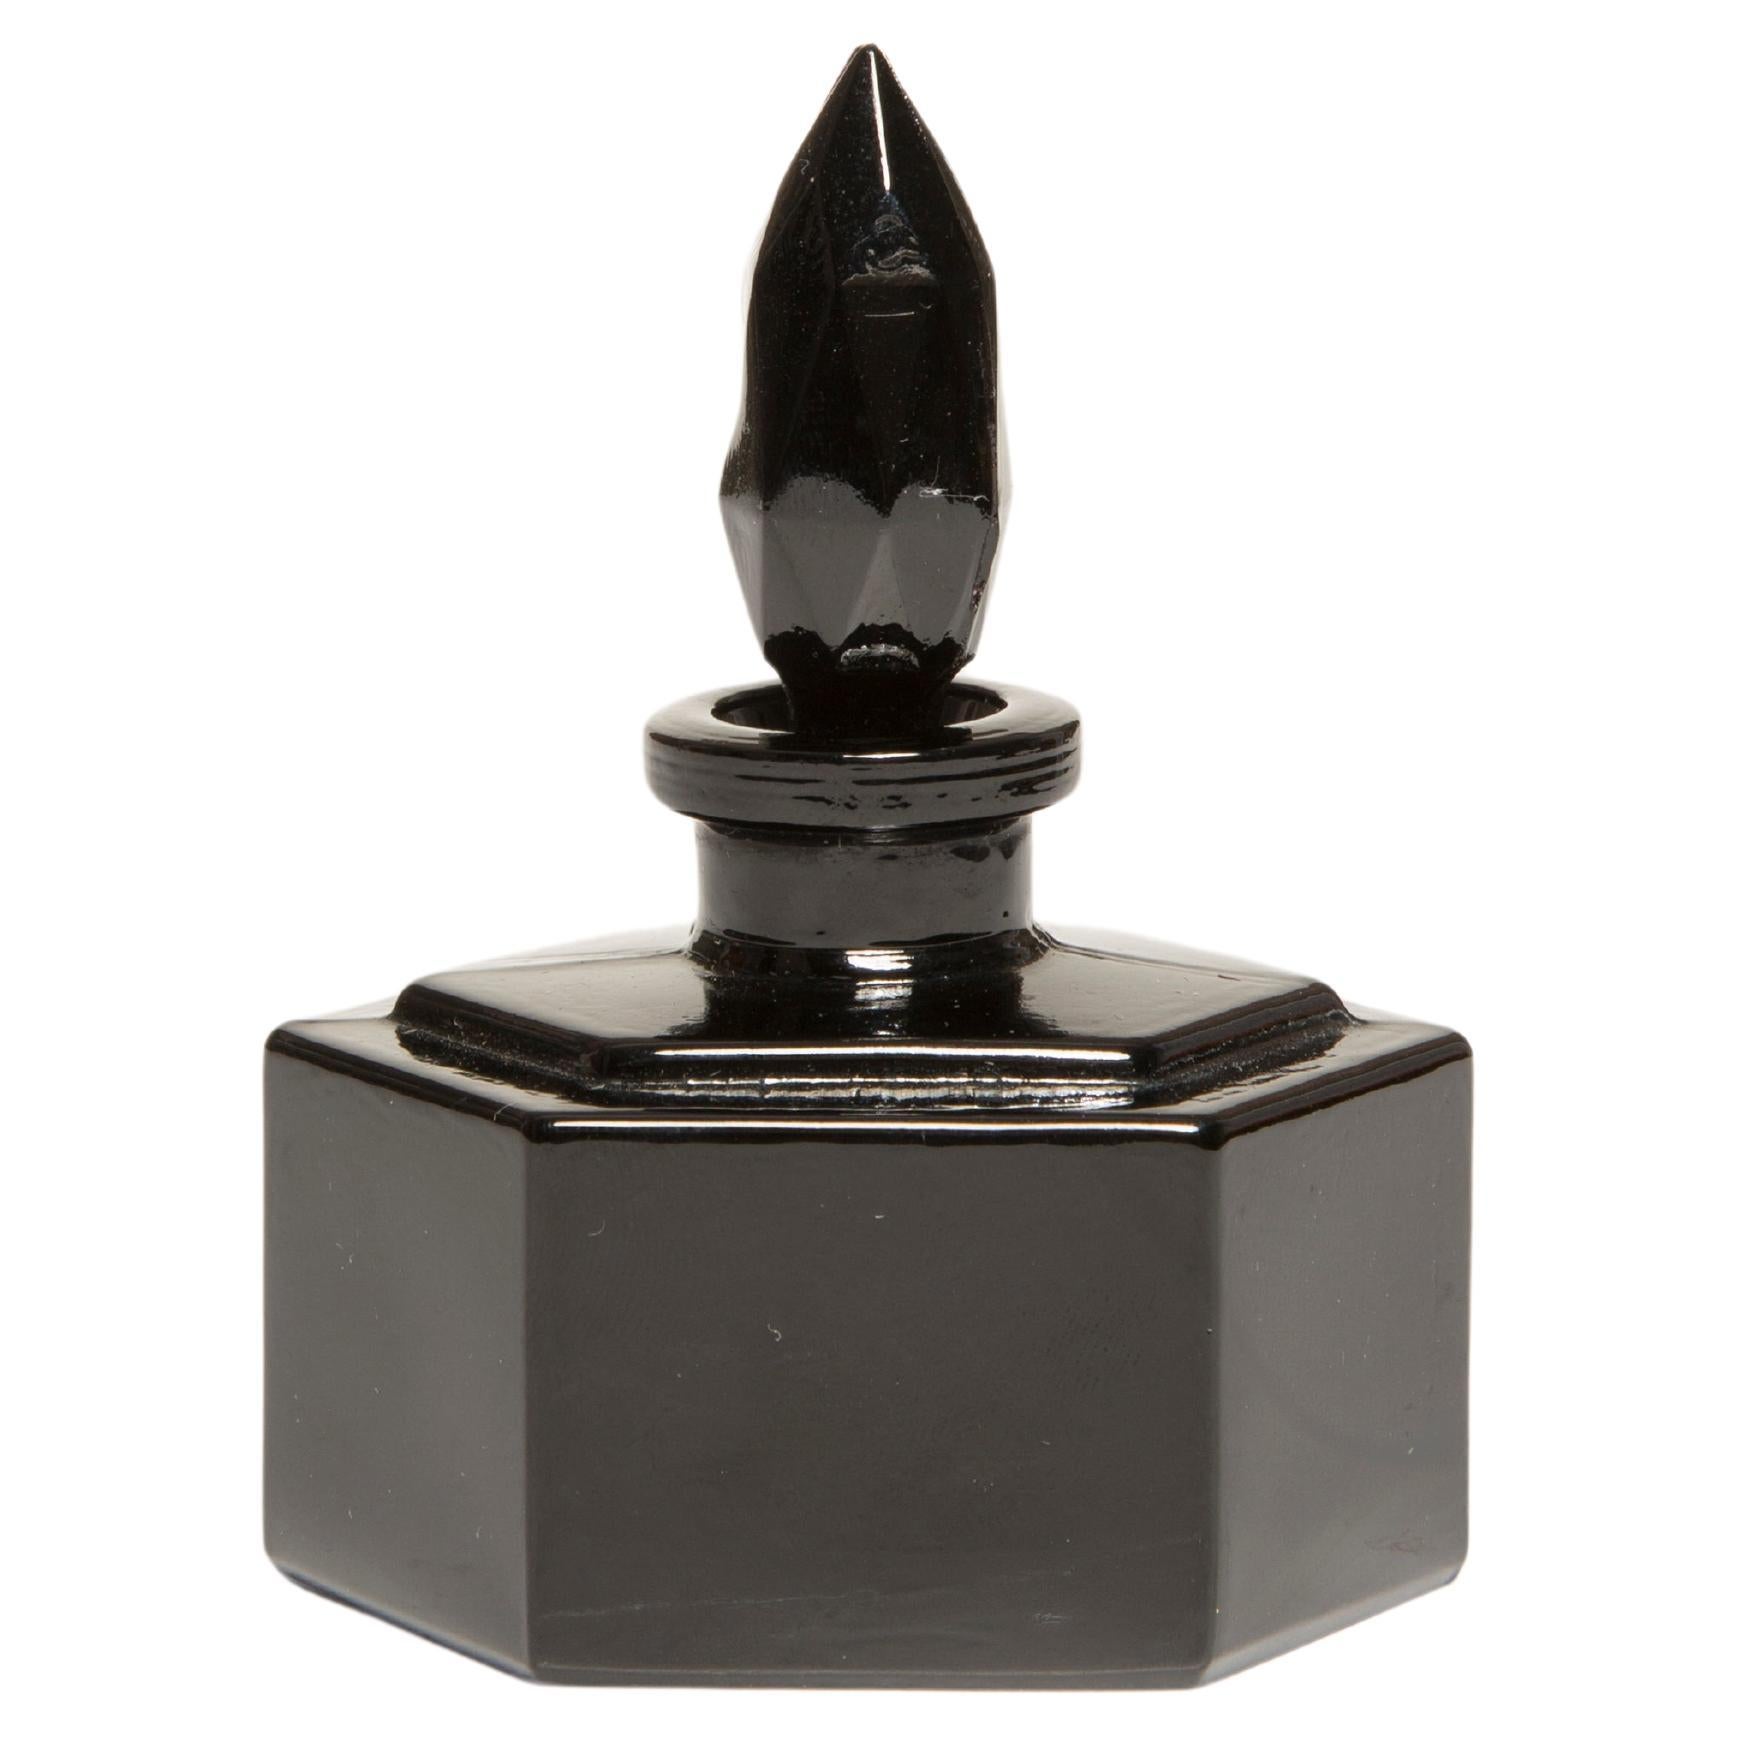 Mid Century Vintage Small Black Decorative Glass Perfume Bottle, Europe, 1960s